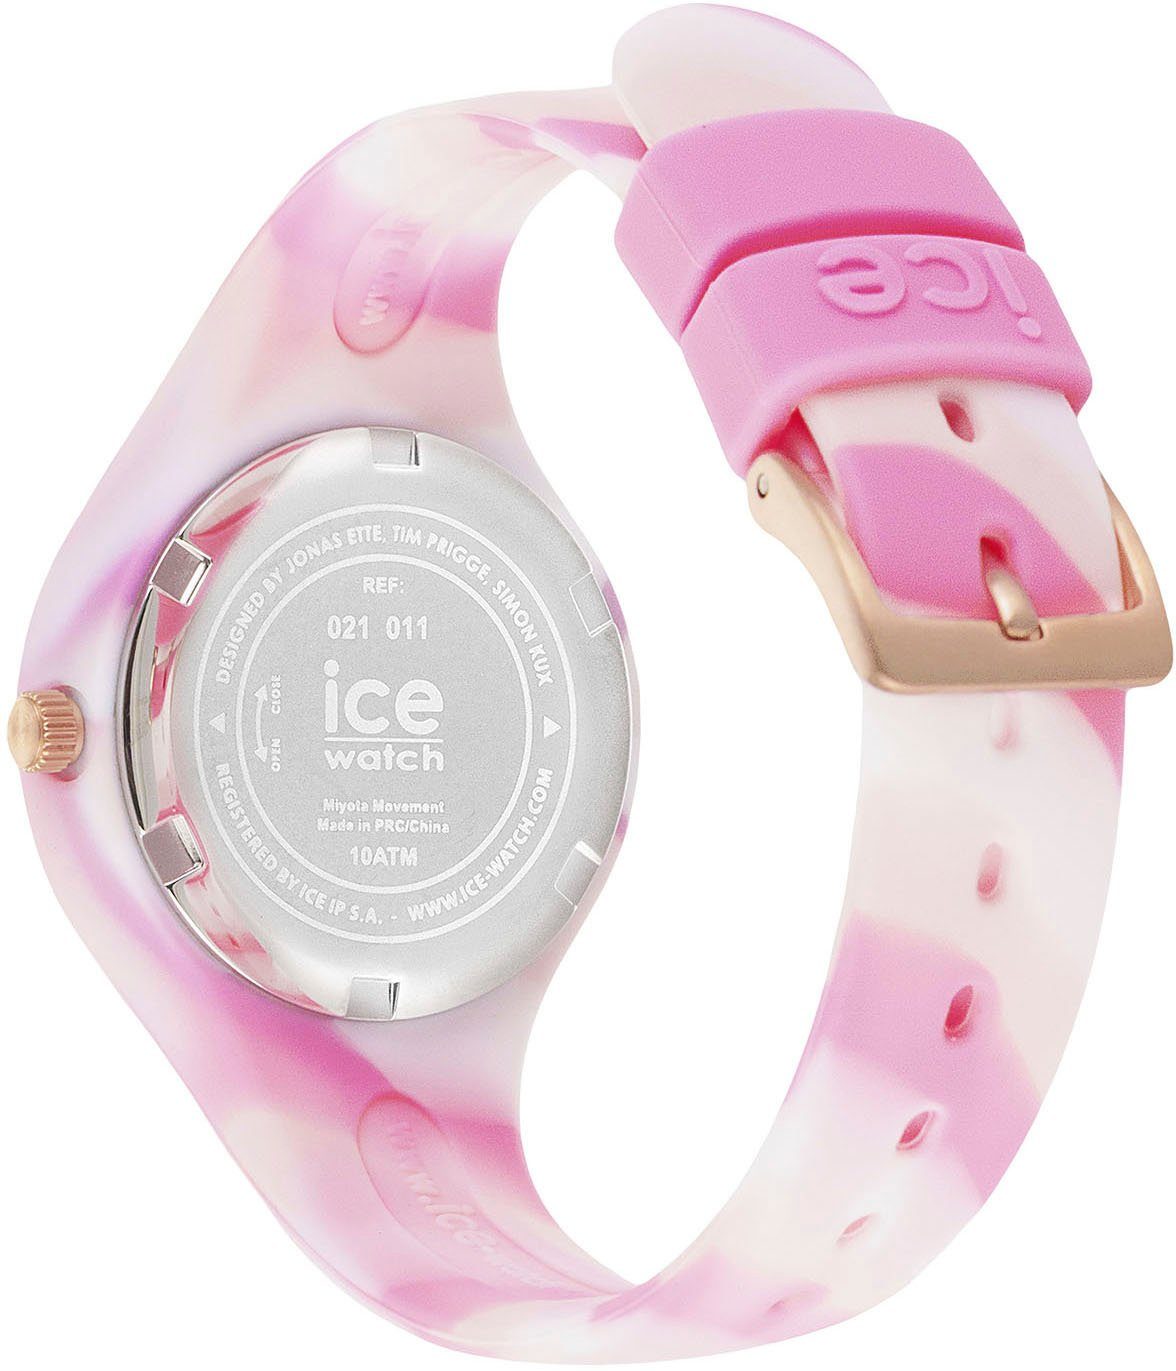 shades - 3H, auch Extra-Small - Pink Quarzuhr tie Geschenk 021011, - ICE and als dye ideal ice-watch